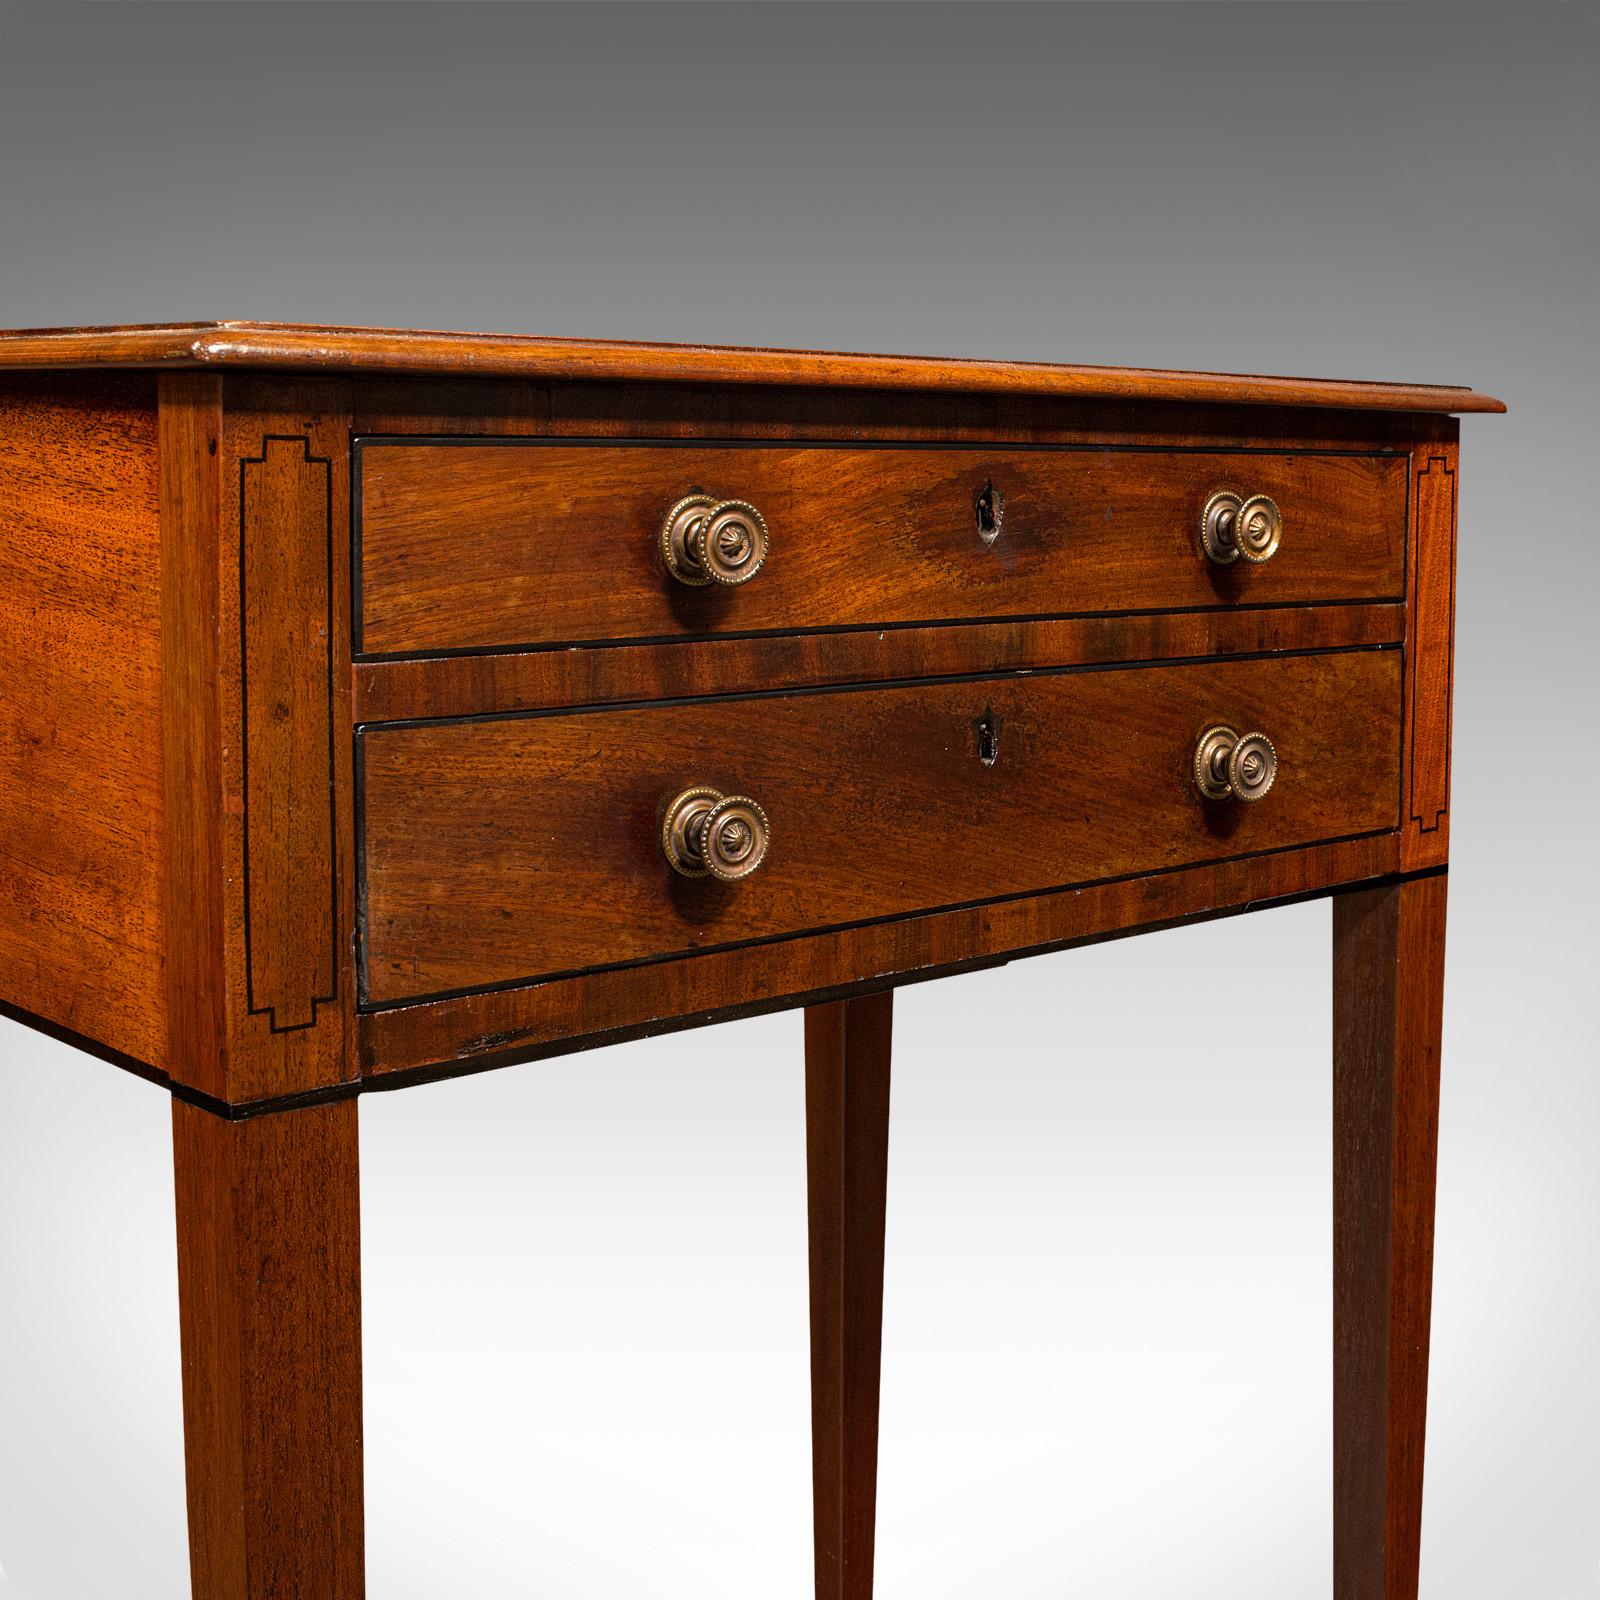 Small Antique Sewing Table, English, Bureau, Correspondence Desk, Georgian, 1800 4